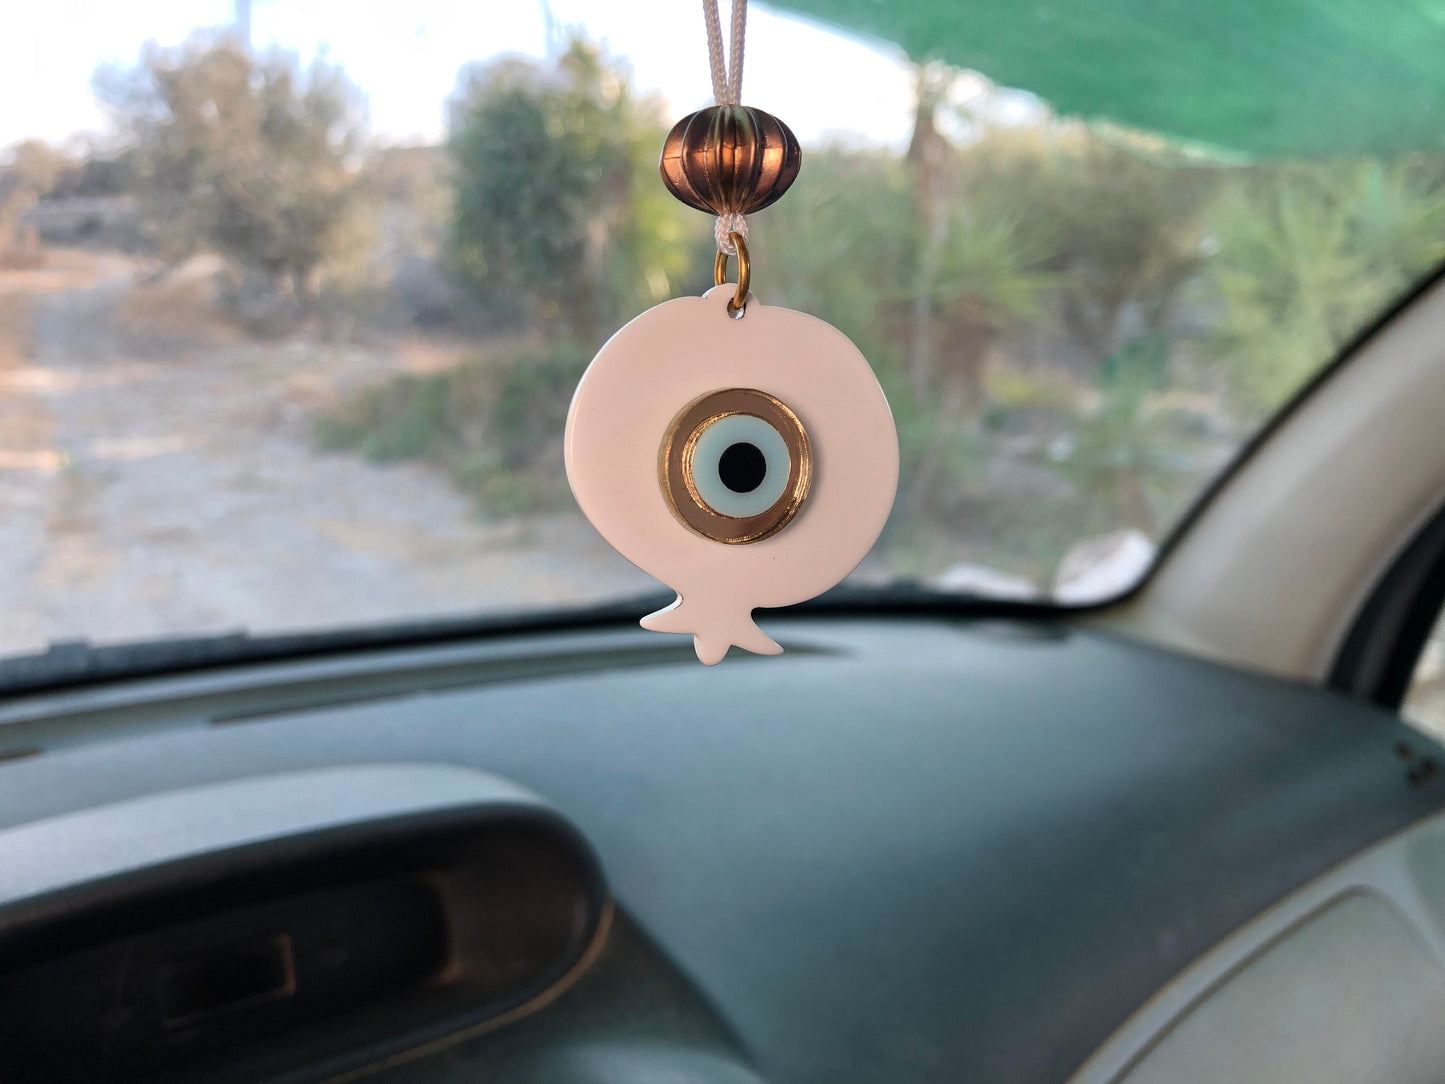 Evil eye pomegranate car mirror charm - Car accessories